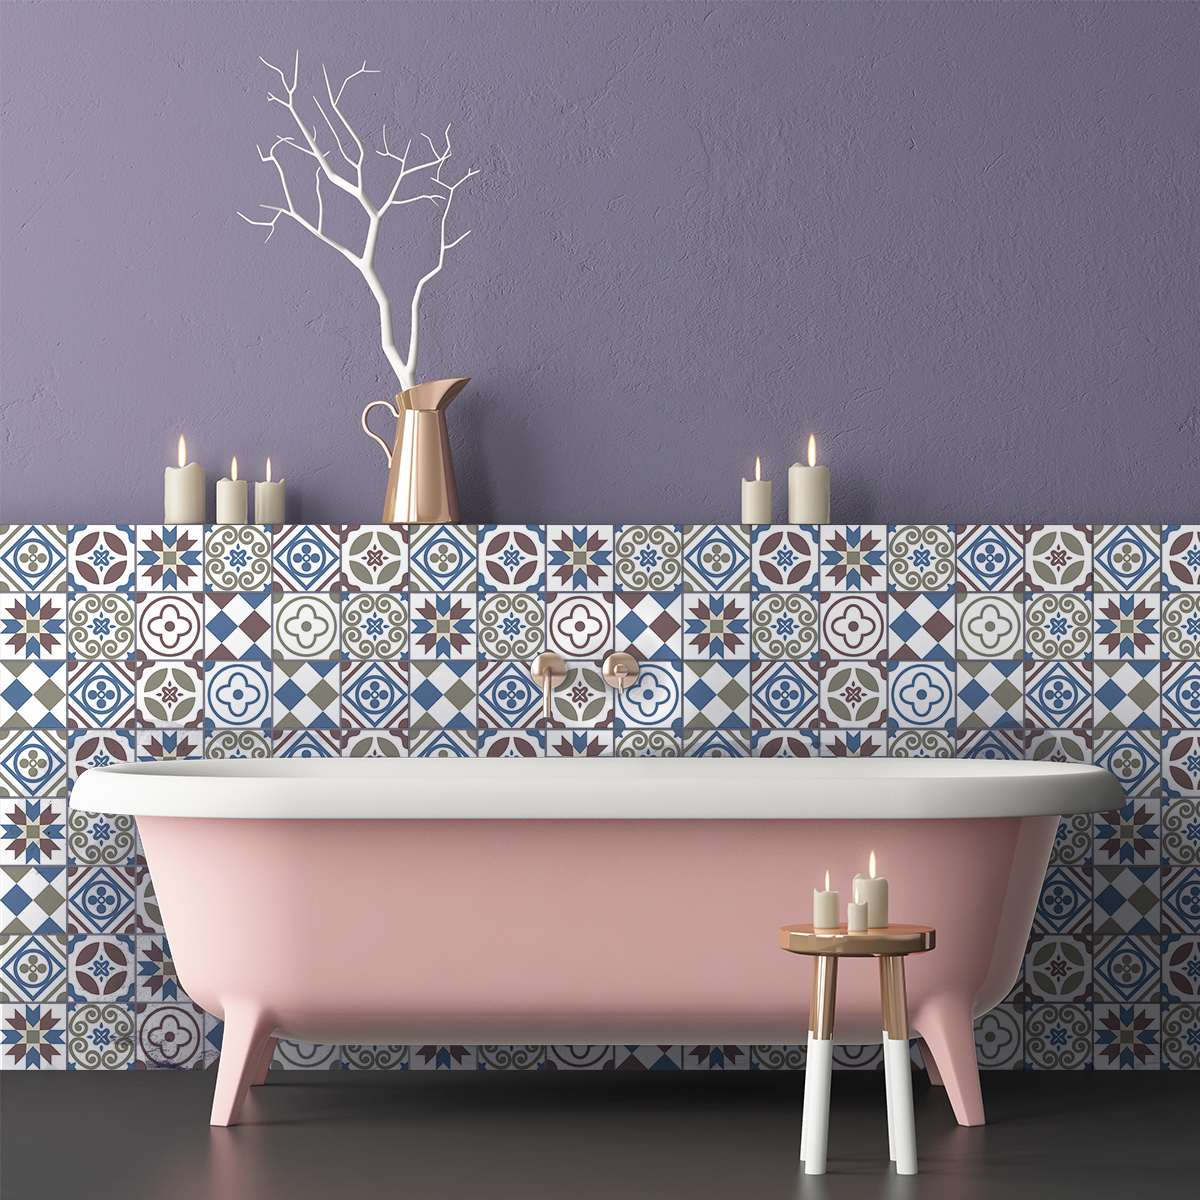 24 wall decal tiles azulejos quonita